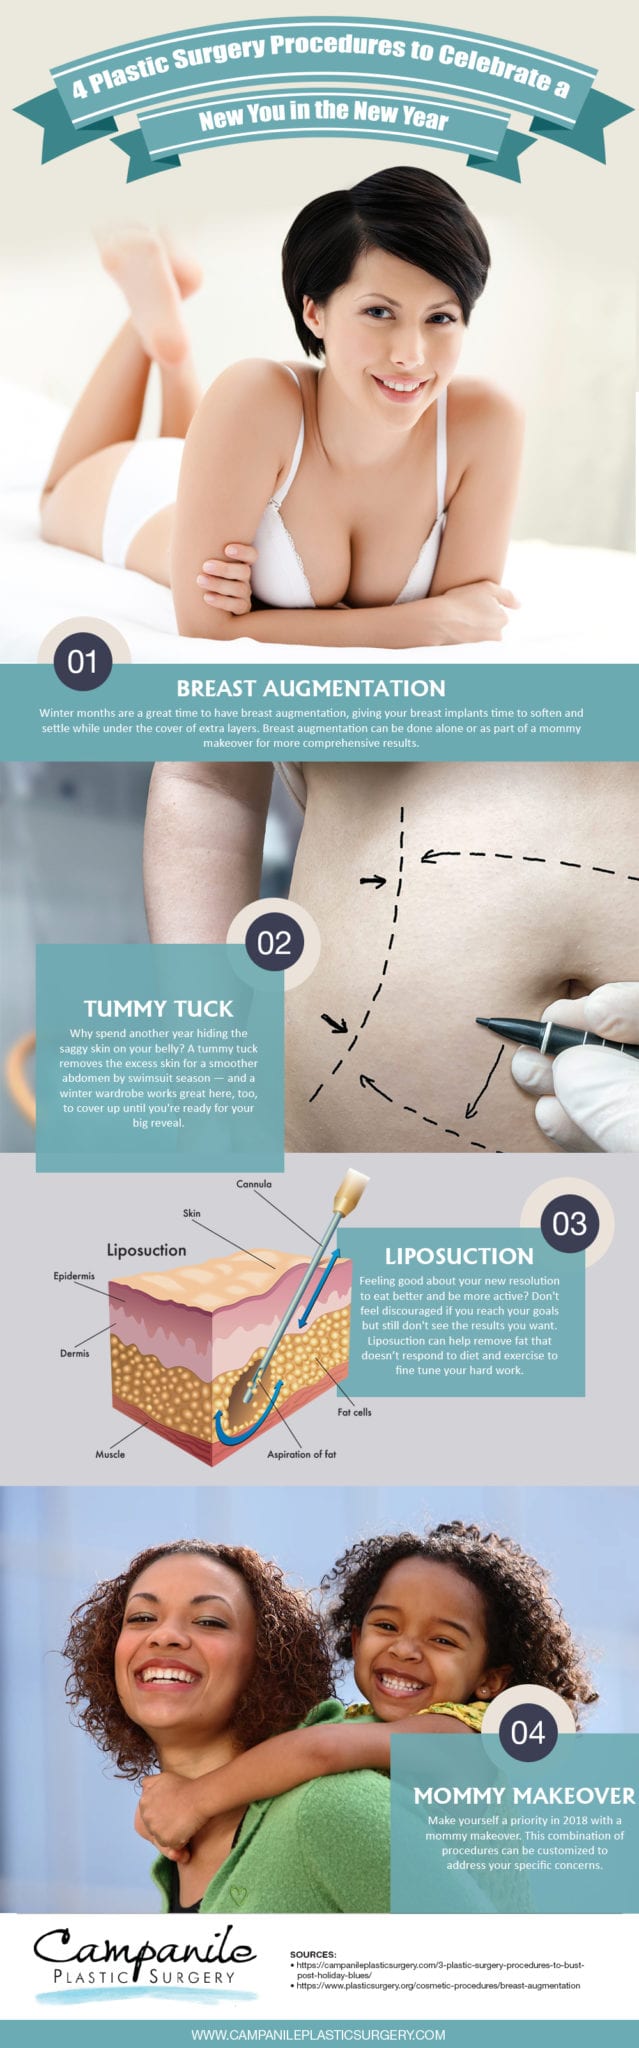 plastic surgery infographic